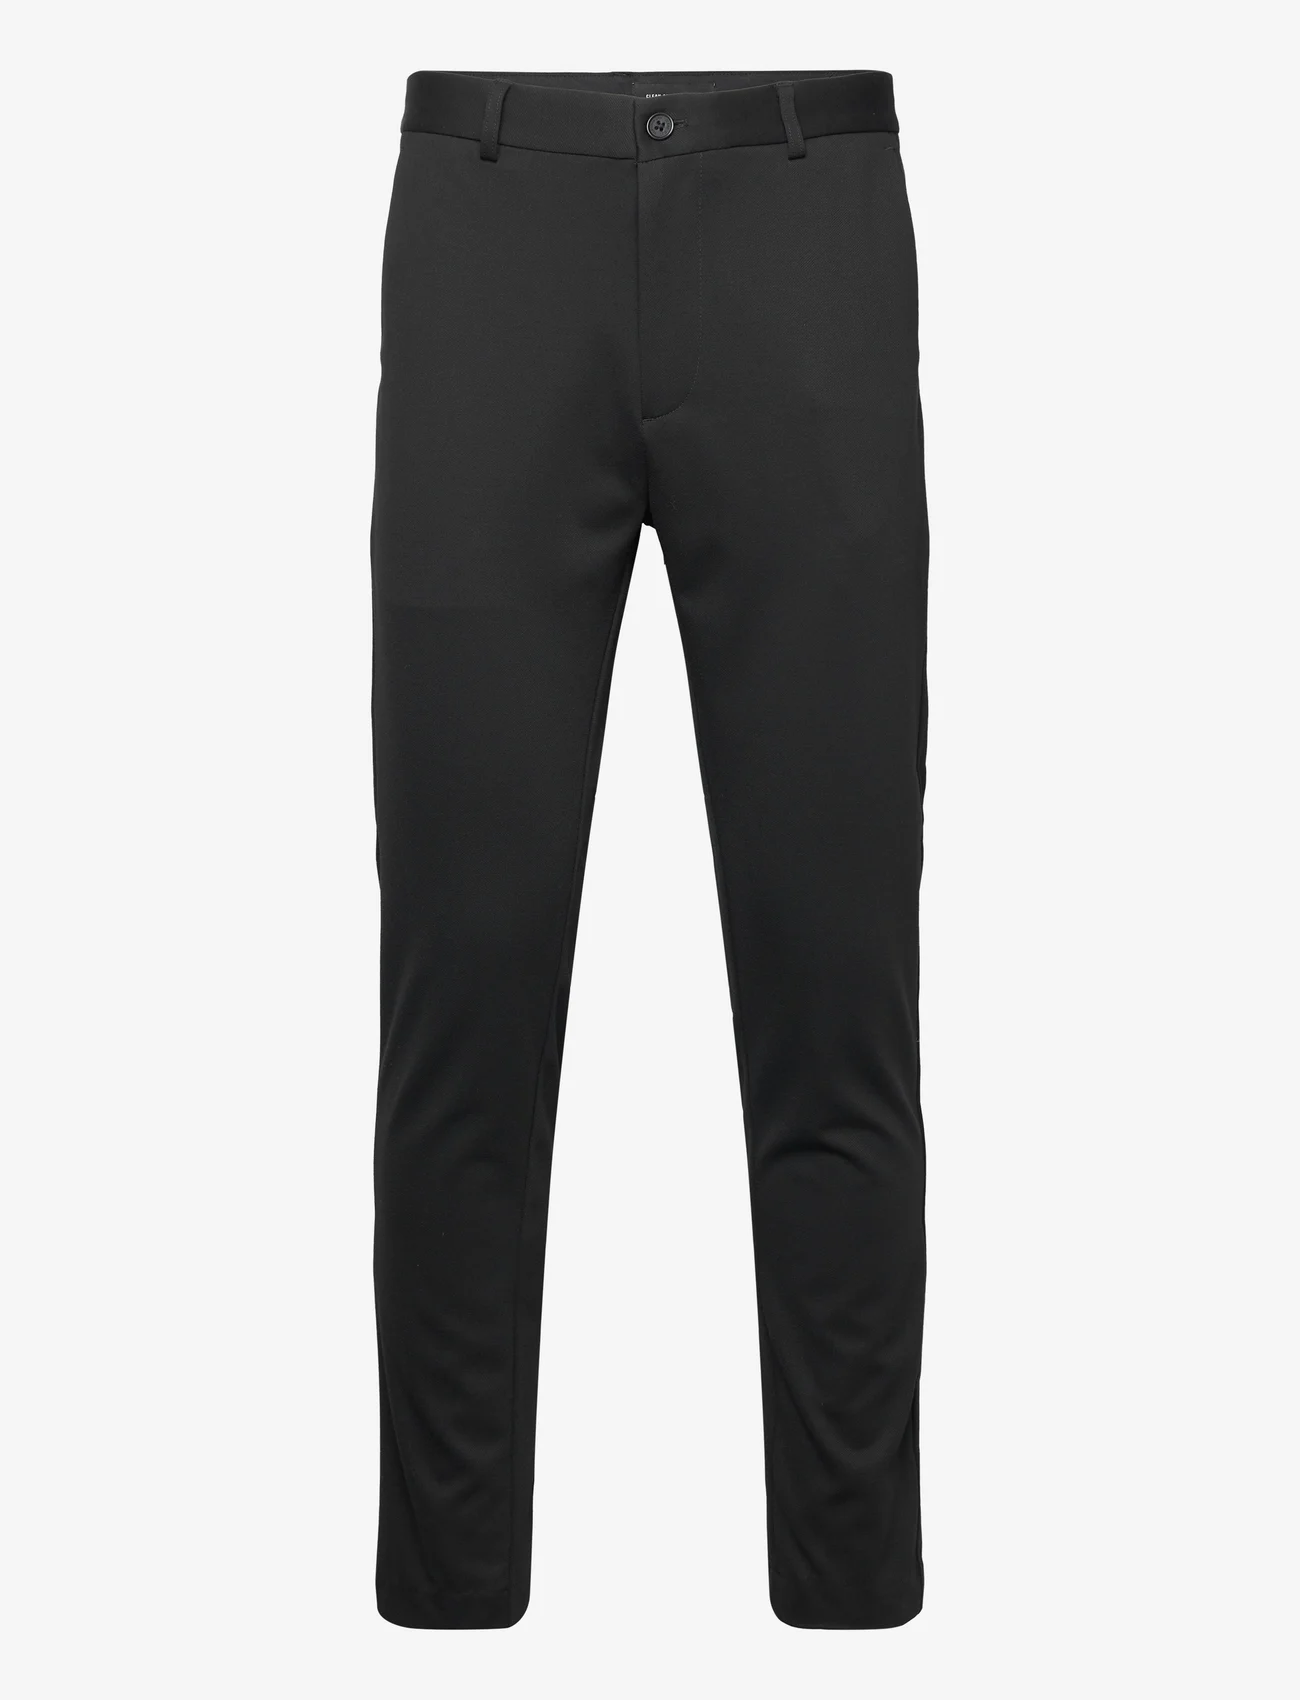 Clean Cut Copenhagen - Milano Brendon Jersey Pants - chinos - black - 0